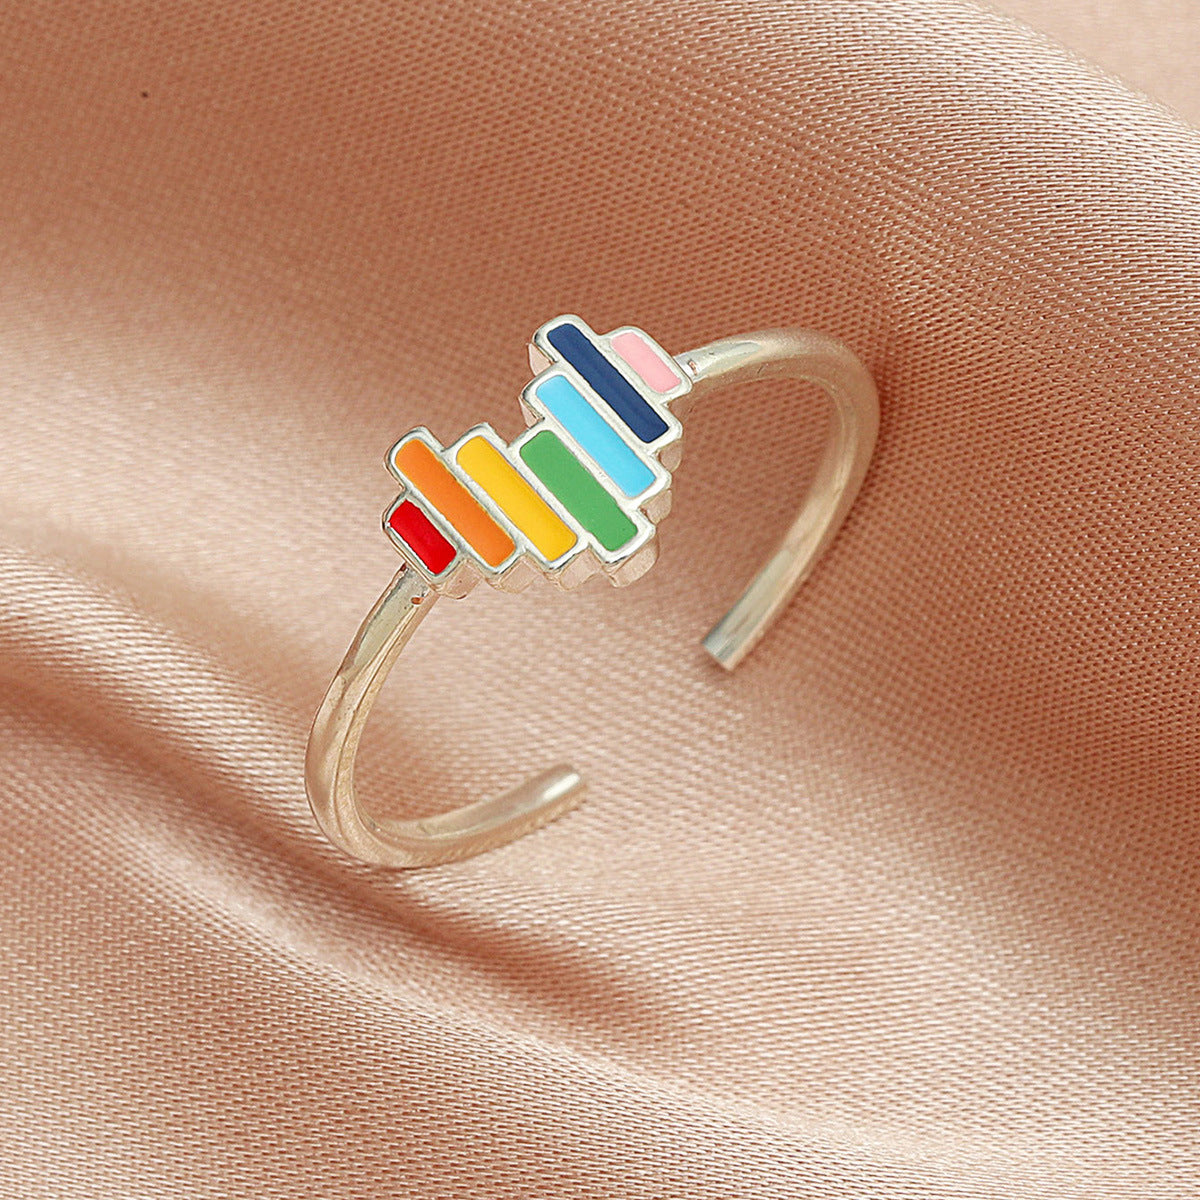 Japan And South Korea Drip Oil Rainbow Love Ring Cute Sweet Adjustable Heart Ring